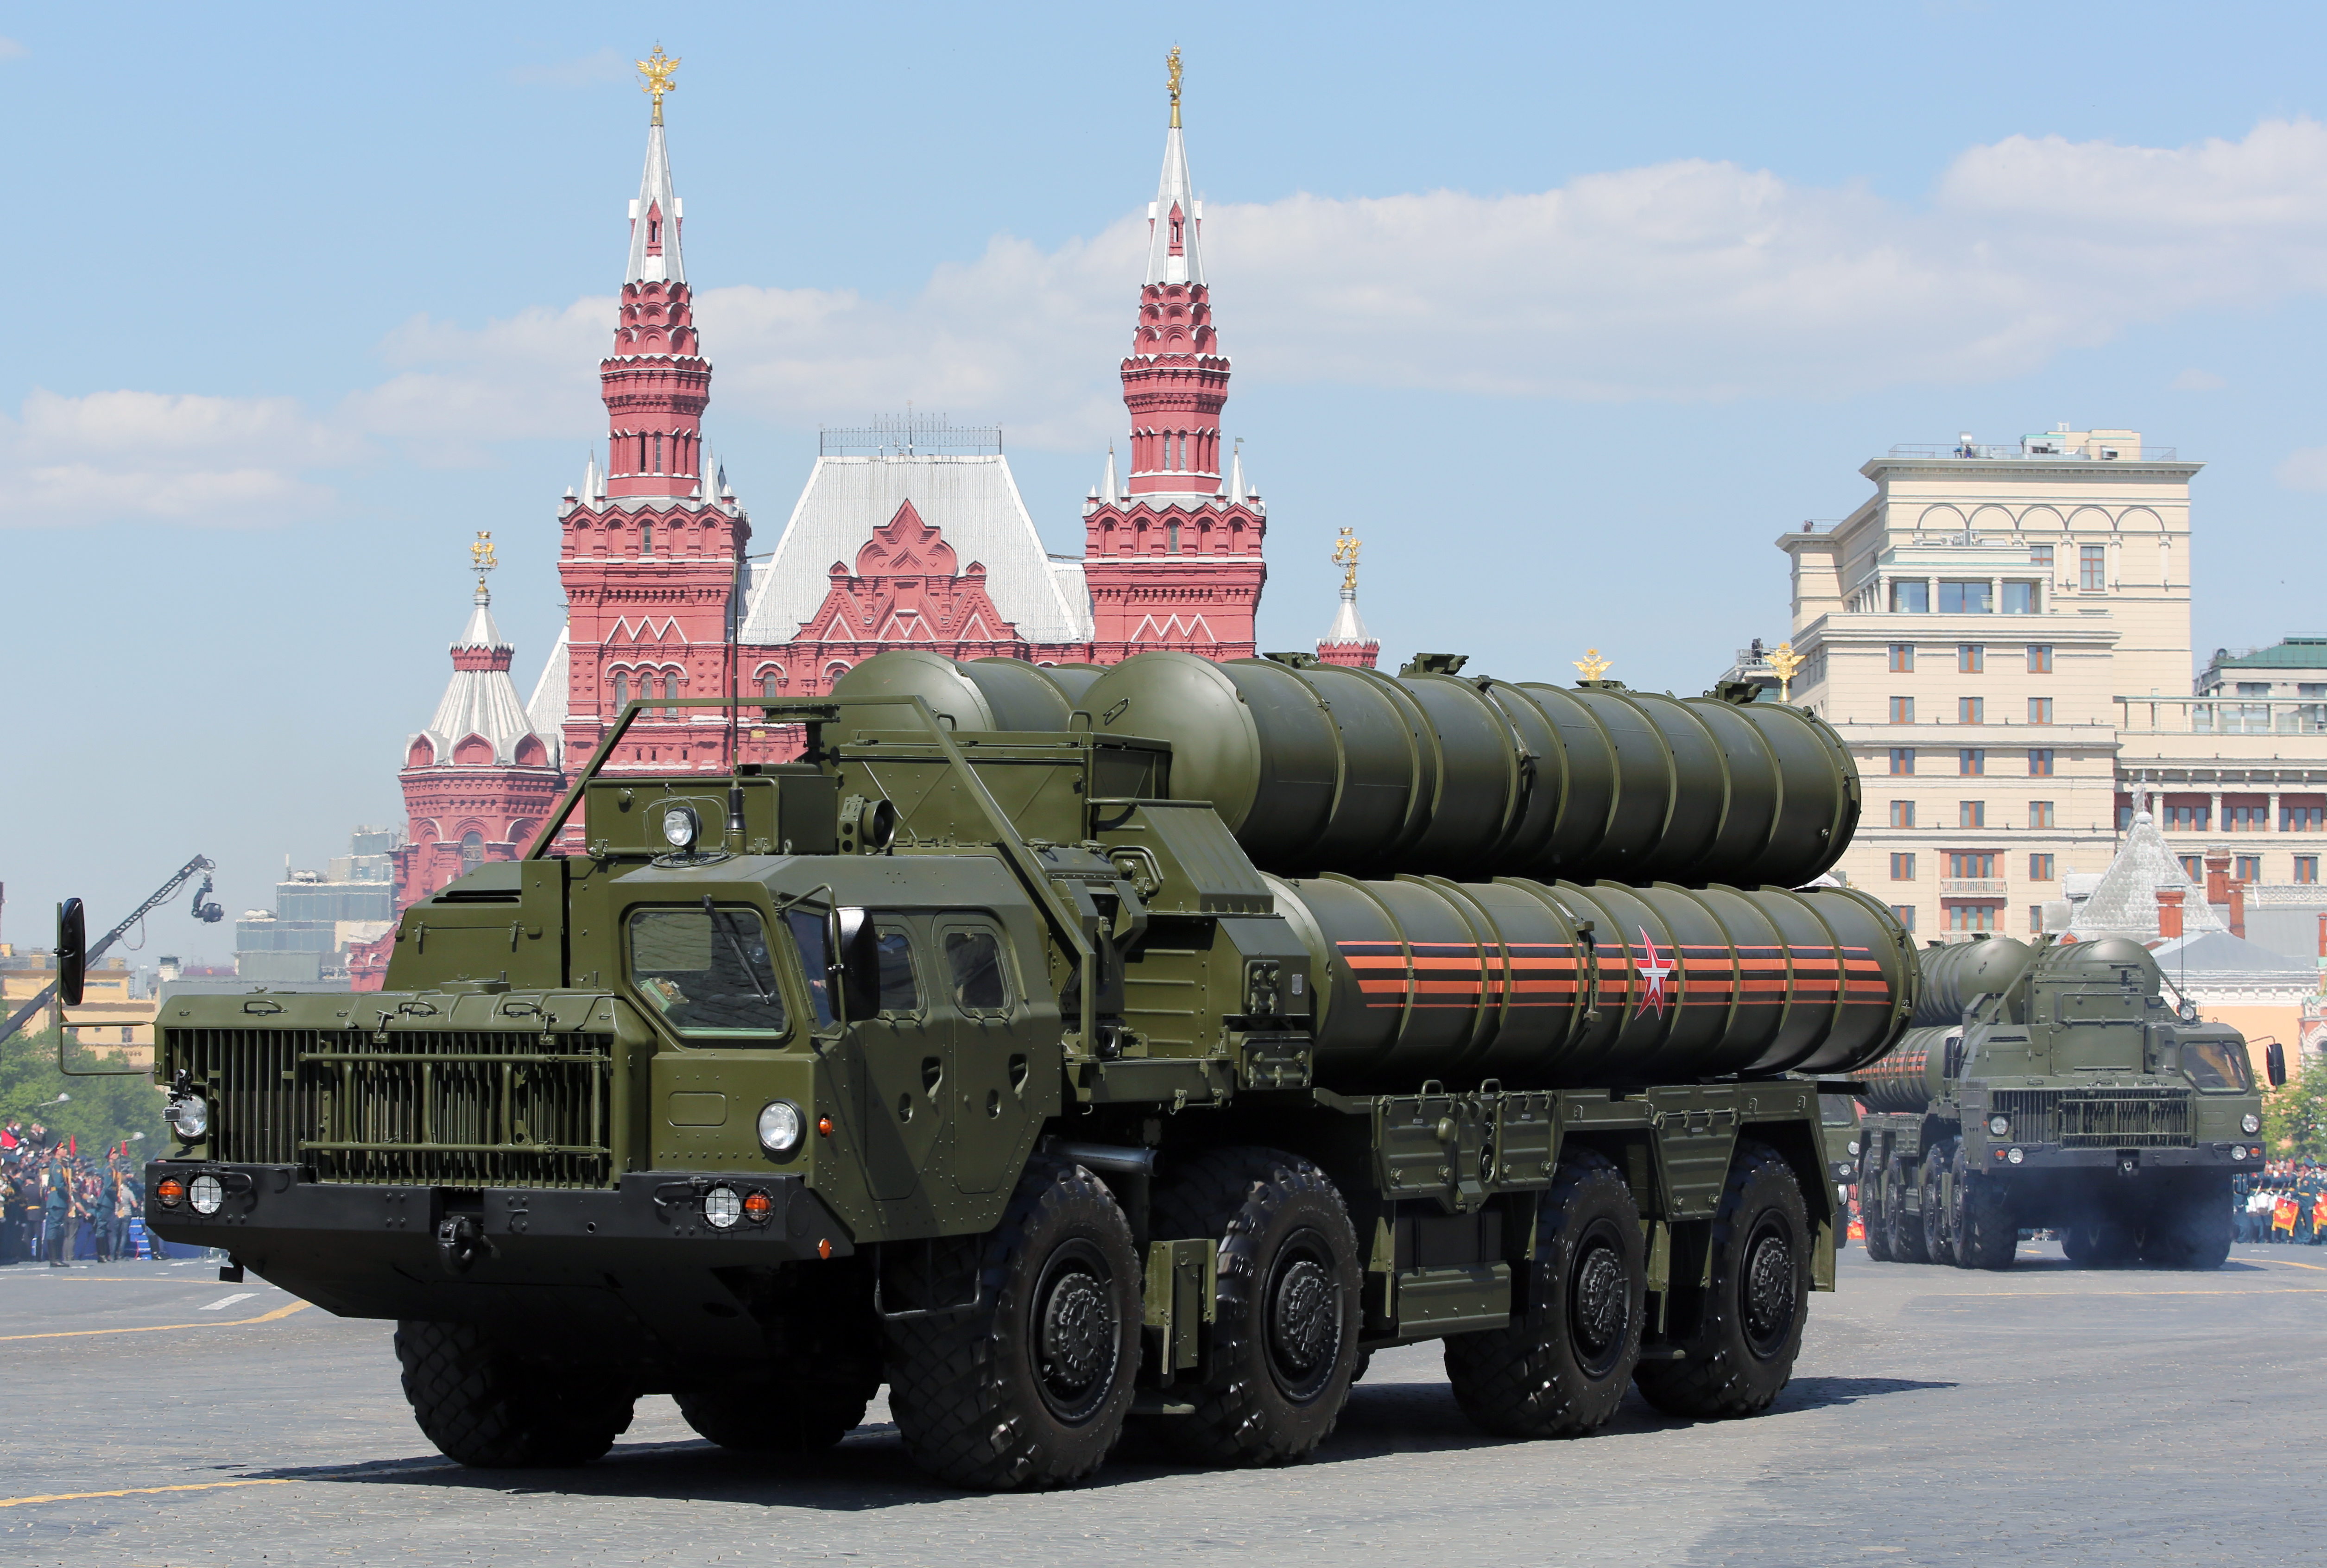 S-400 merupakan sistem rudal antipesawat jarak jauh terbaru milik Rusia yang dirancang untuk menghancurkan pesawat, kapal jelajah, dan rudal balistik, termasuk rudal jarak menengah. 